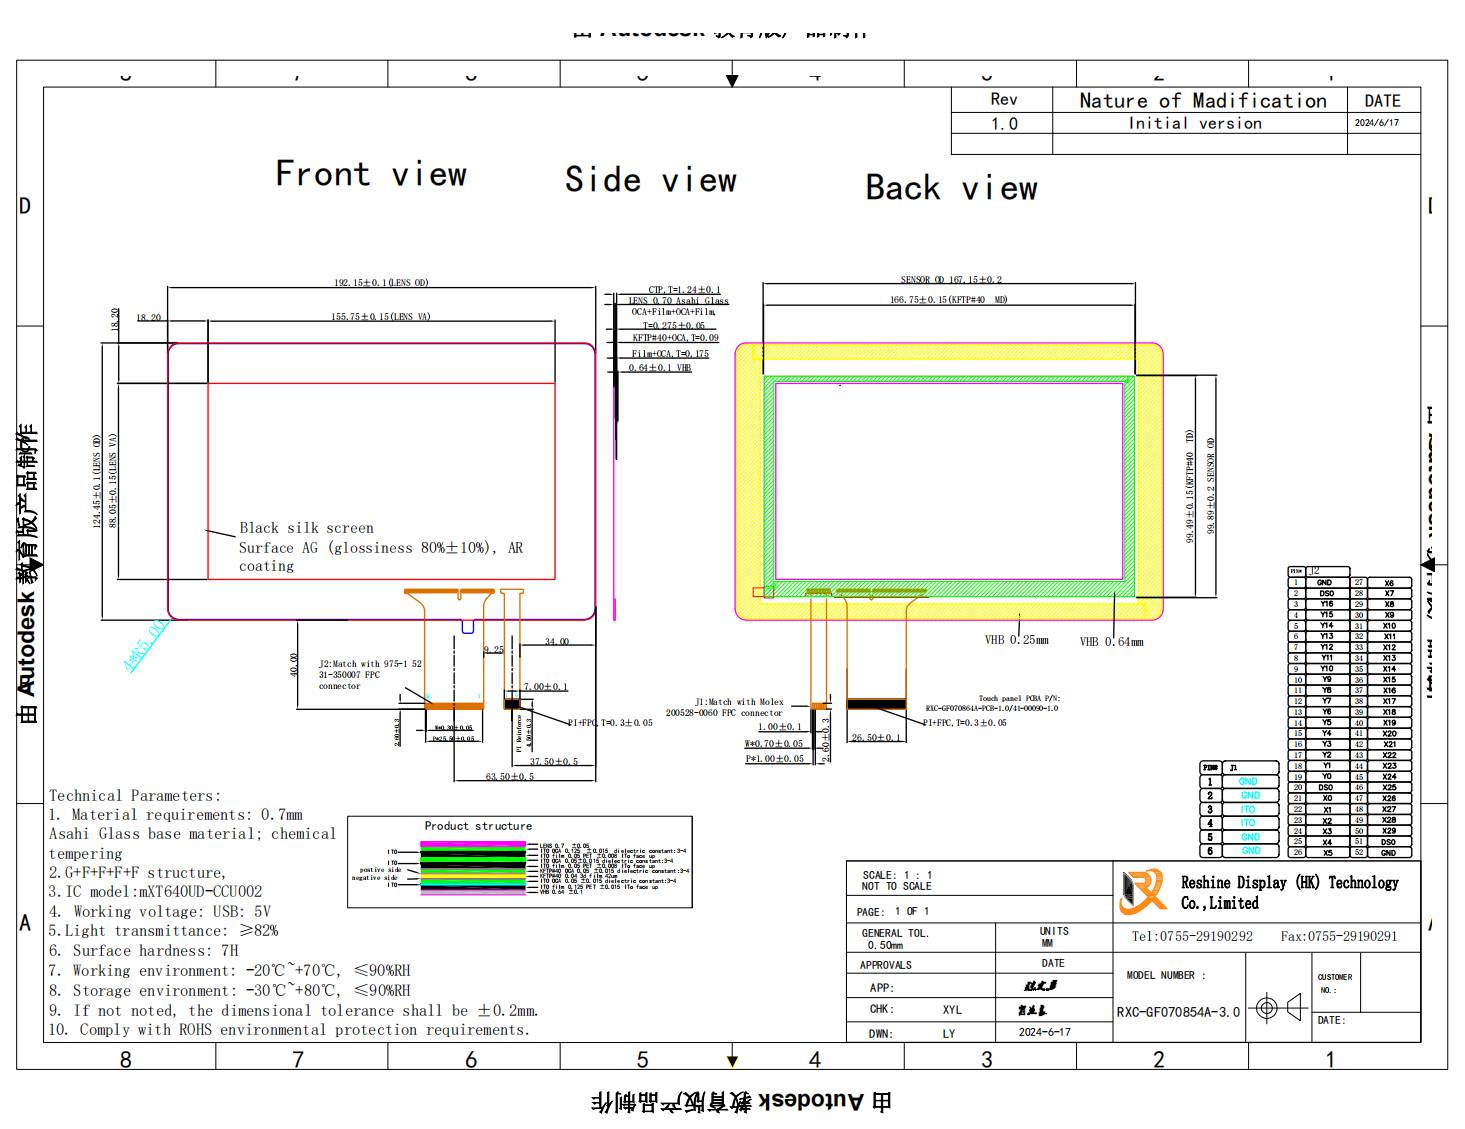 RXC-GF070854A-3.0 工程图 单TP Model (1)_00(1)